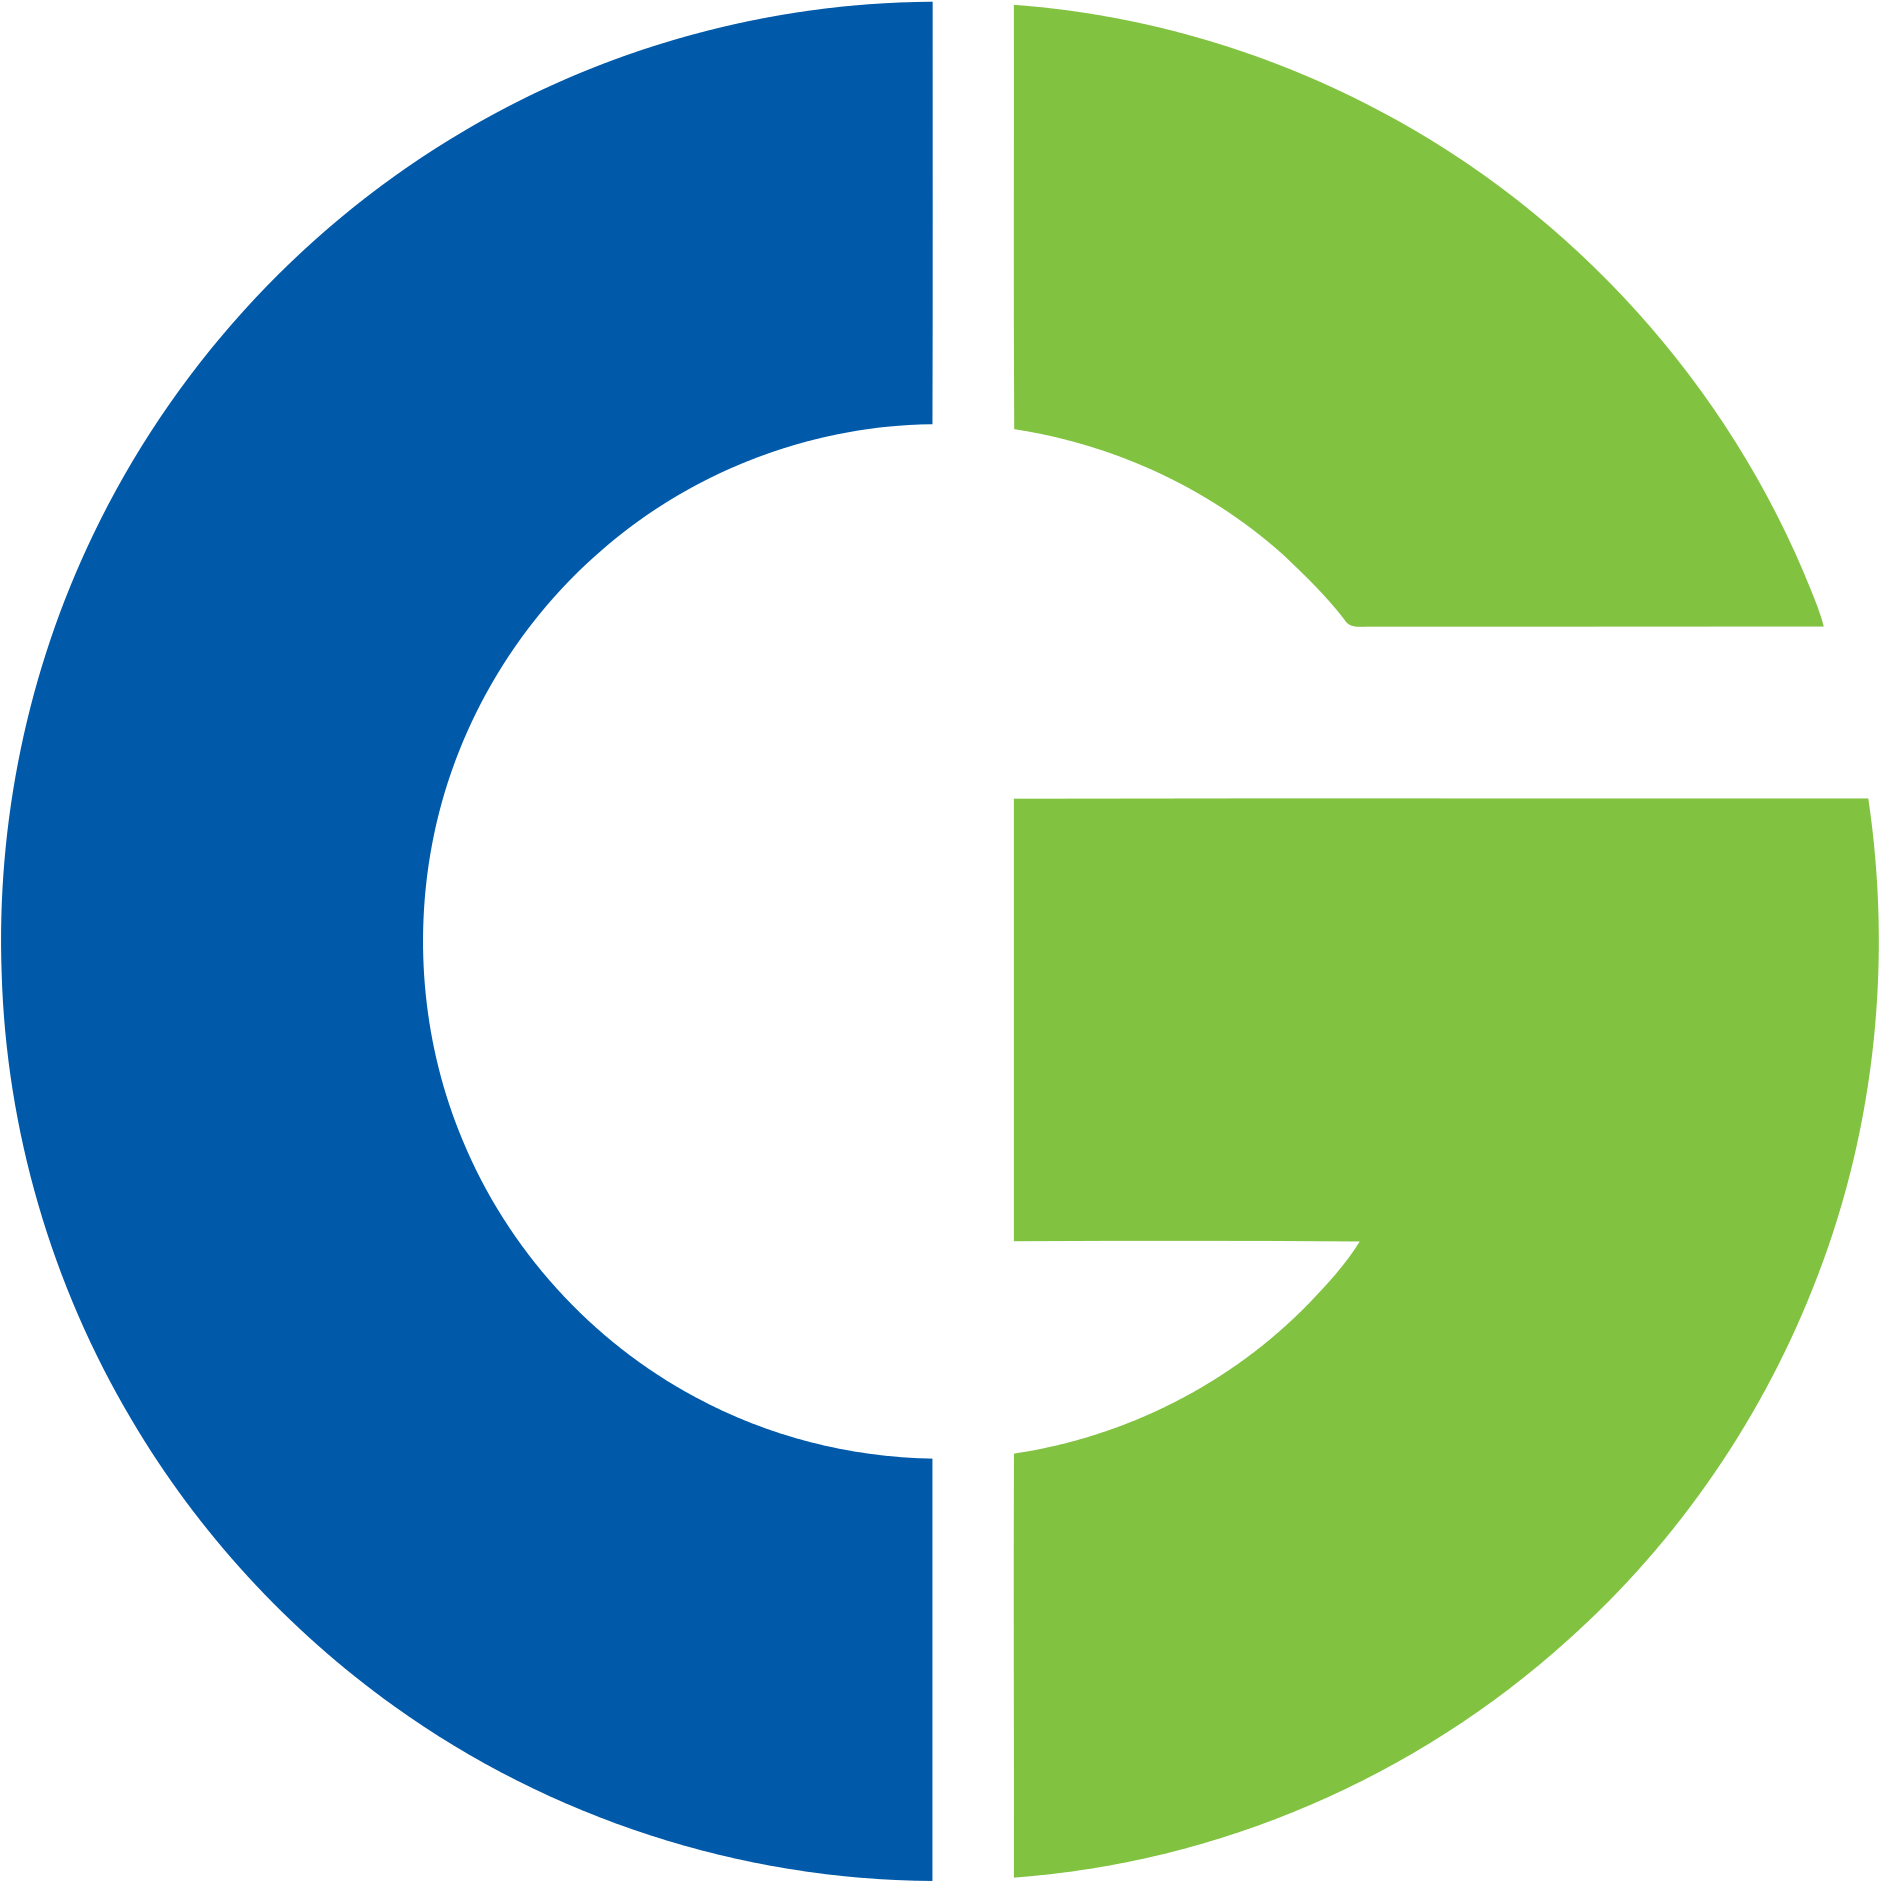 G c cg. Логотип. Логотип CG. Значок c,g. Логотип с буквой c.